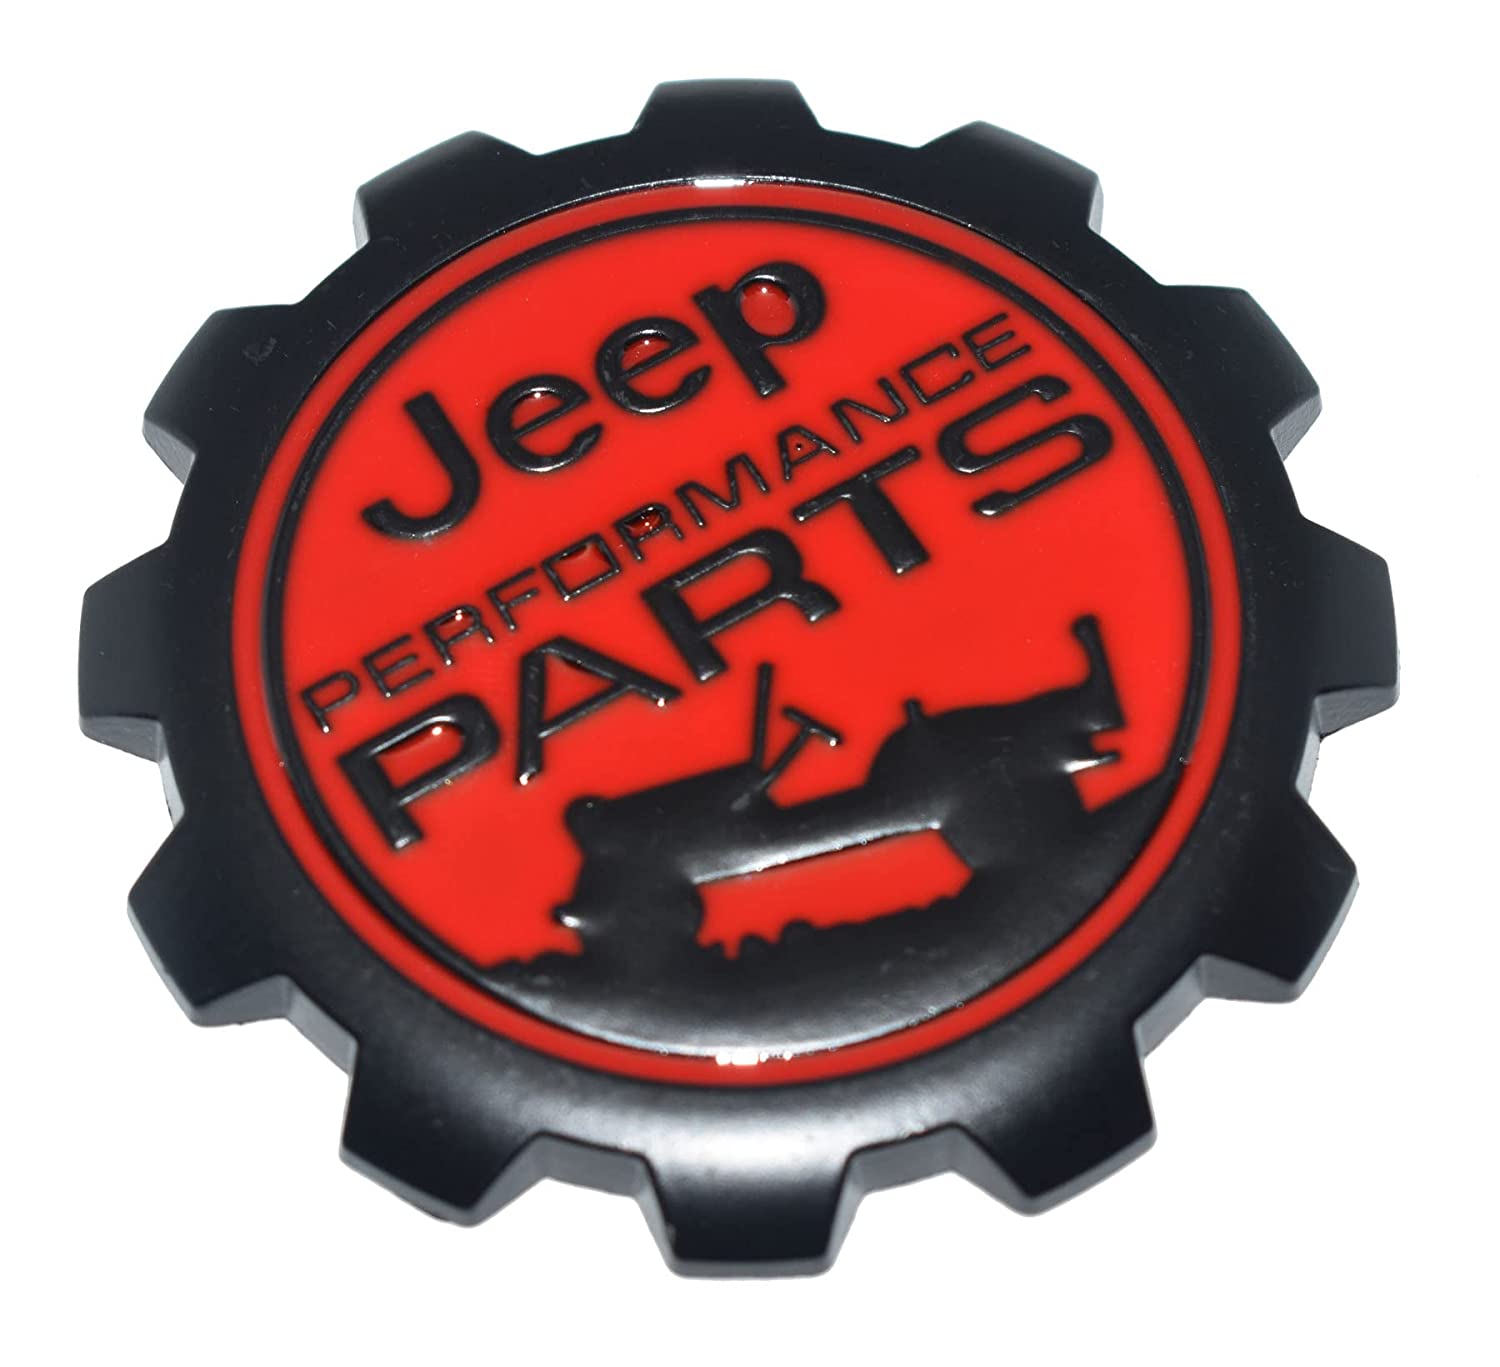 Jeep Performance Parts Emblem Sticker for All Jeep Cars, Metal (Black)